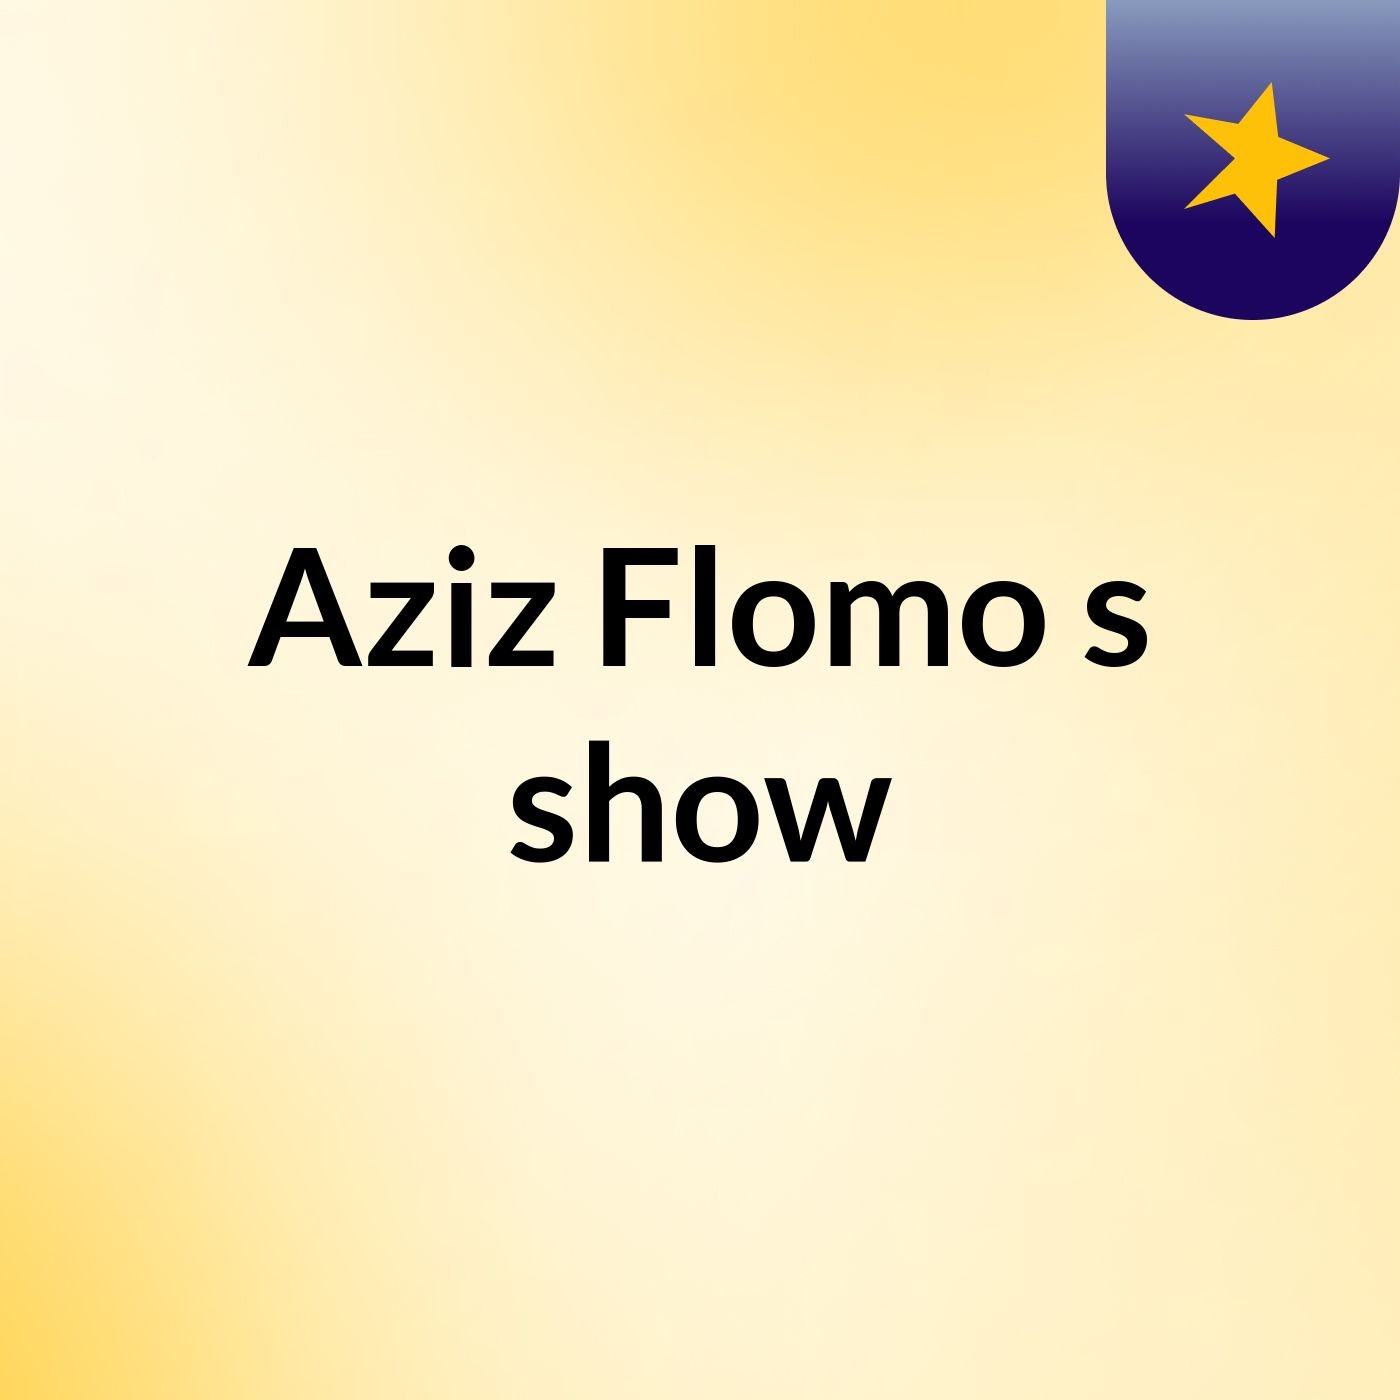 Aziz Flomo's show